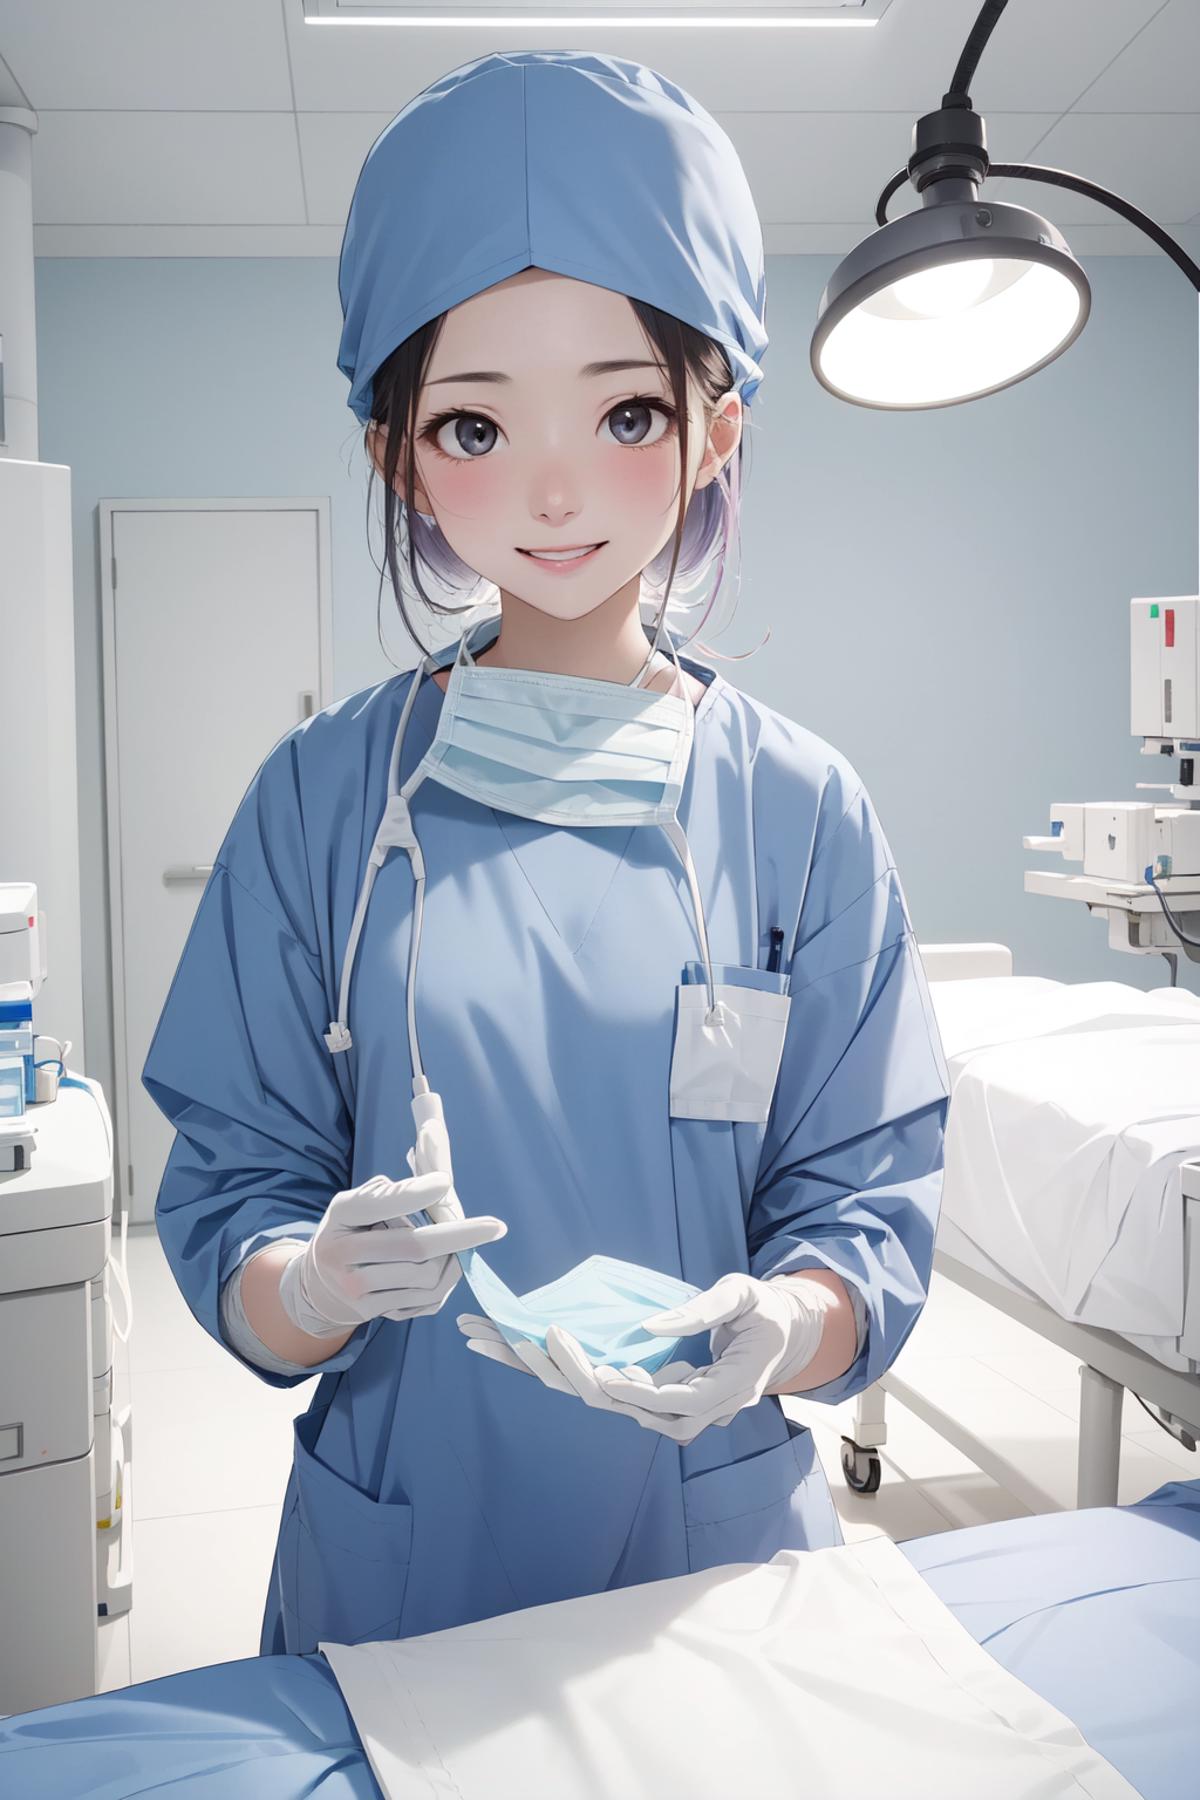 Female Surgeon / Surgical Nurse Taking Off Mask image by phageoussurgery439